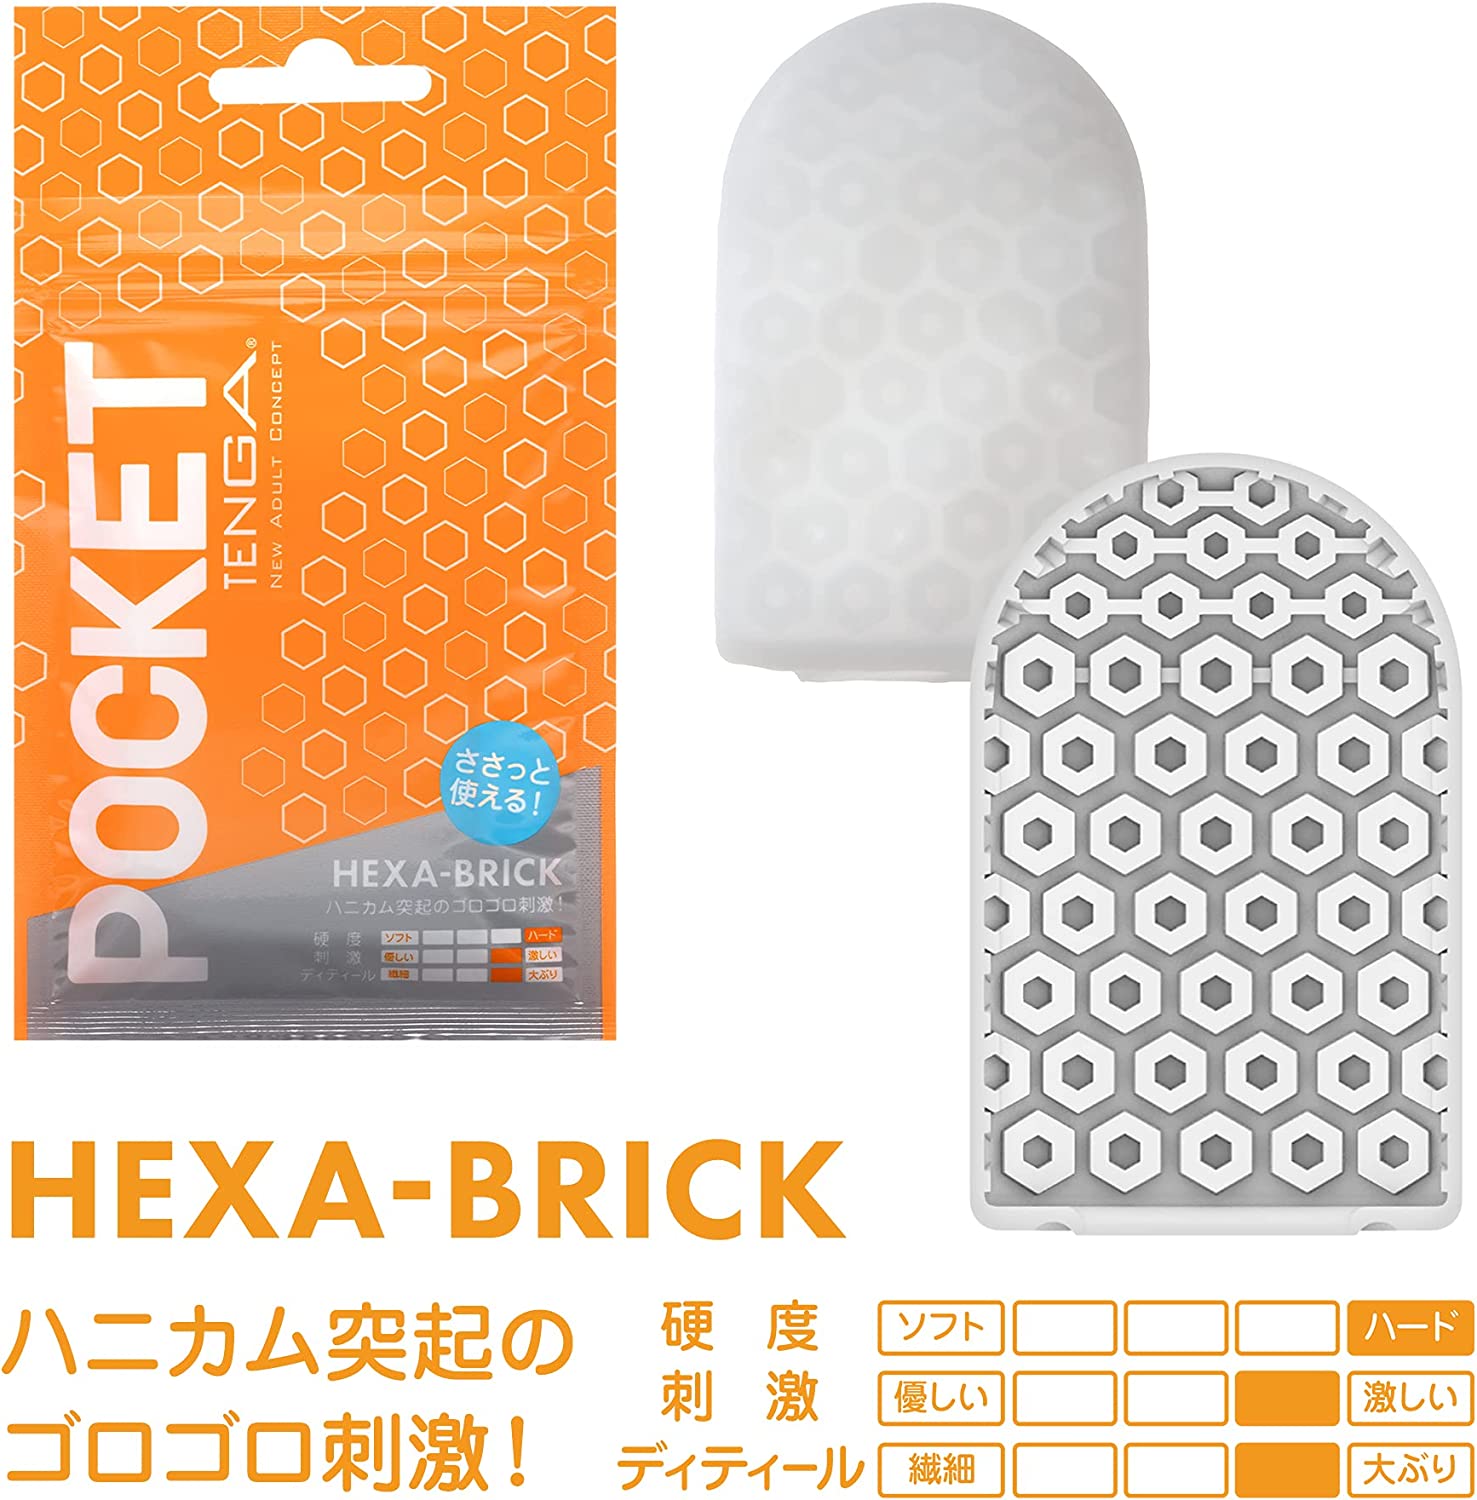 TENGA Pocket POT-004 Hexa-Brick Male Masturbator,Orange